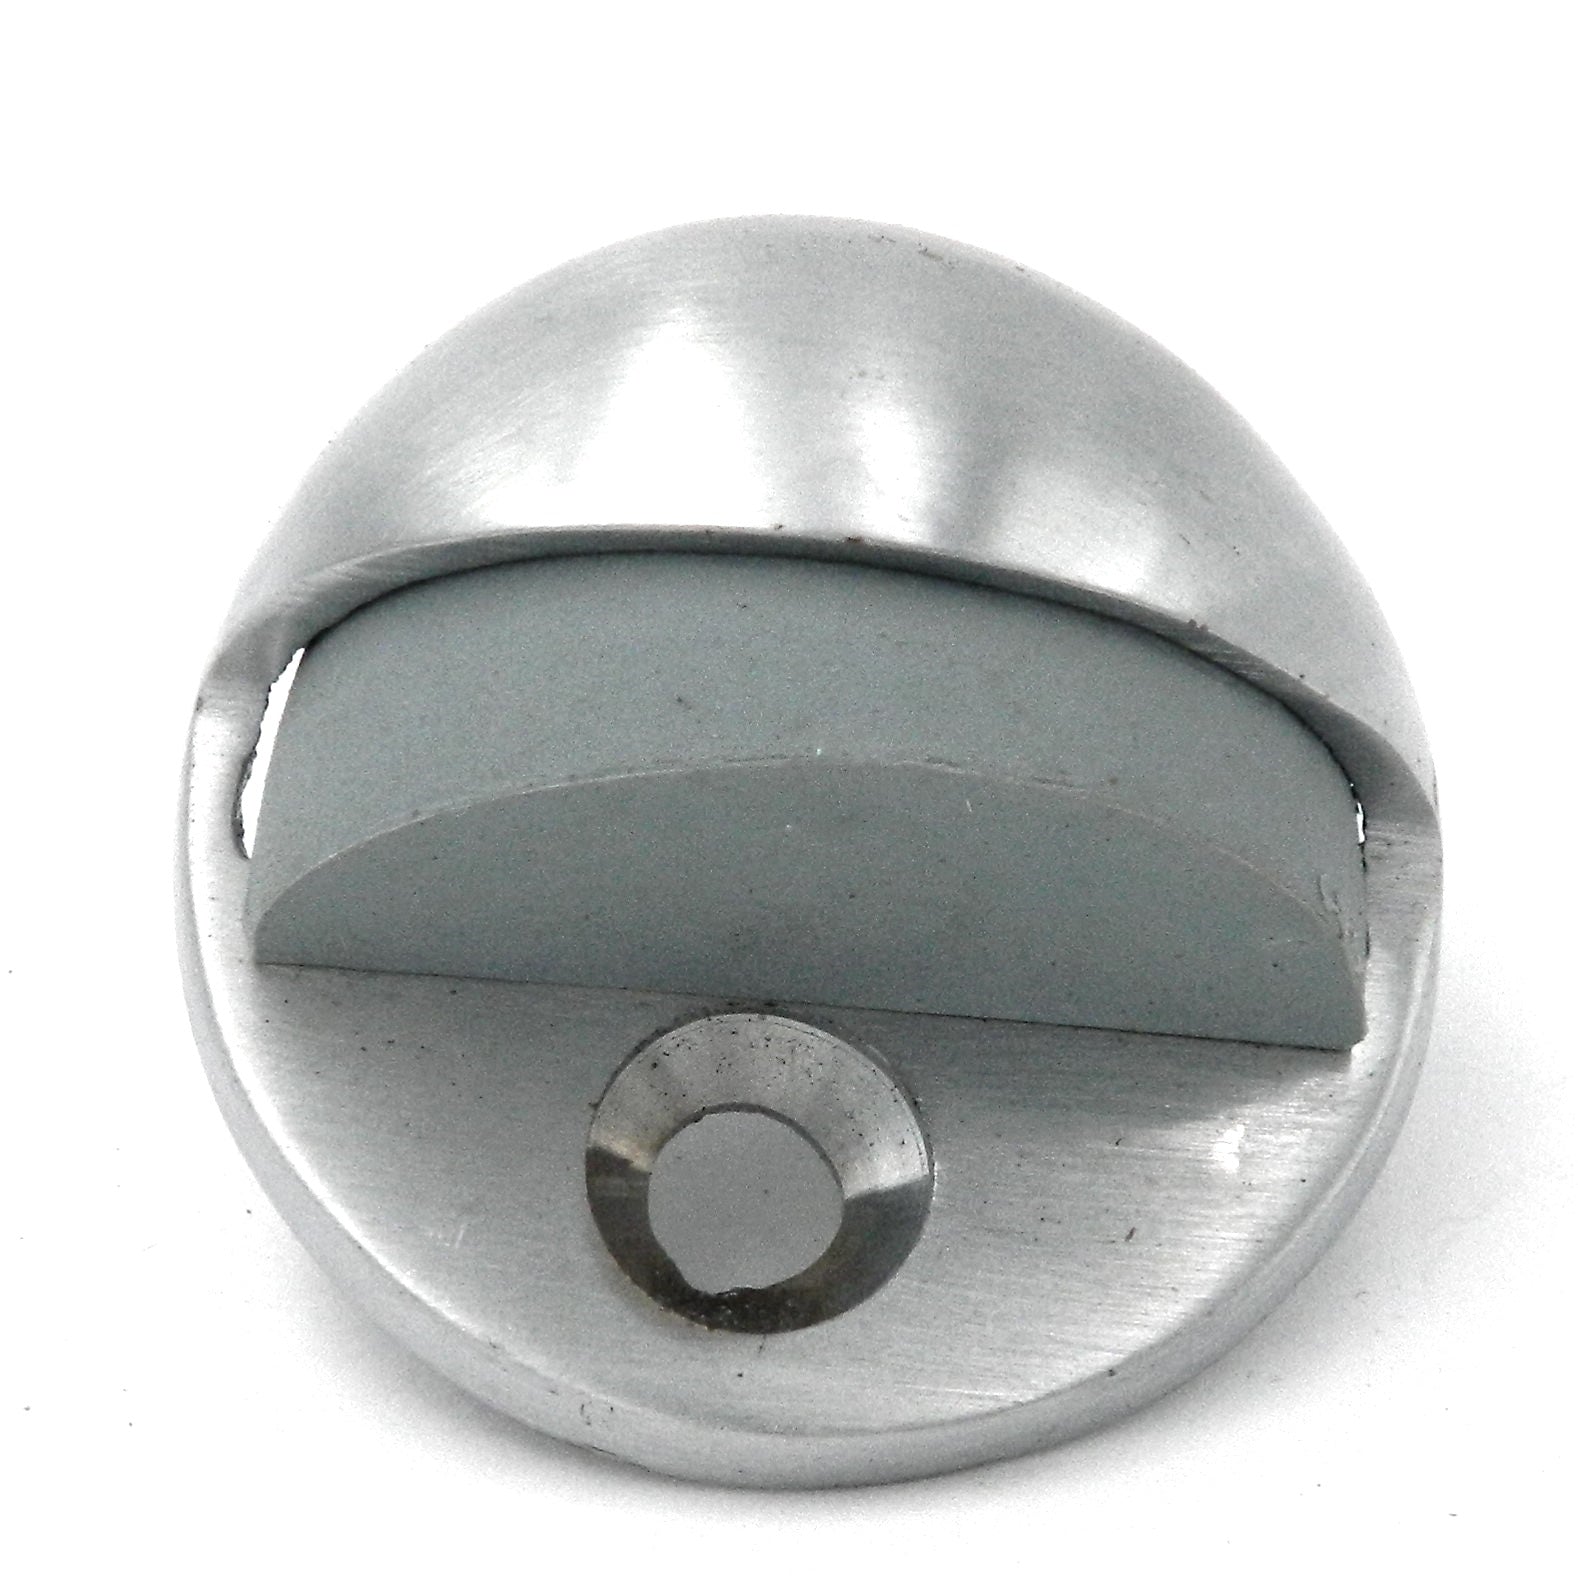 Hickory PBH3004-SC Tope para puerta tipo cúpula de latón macizo, cromado satinado